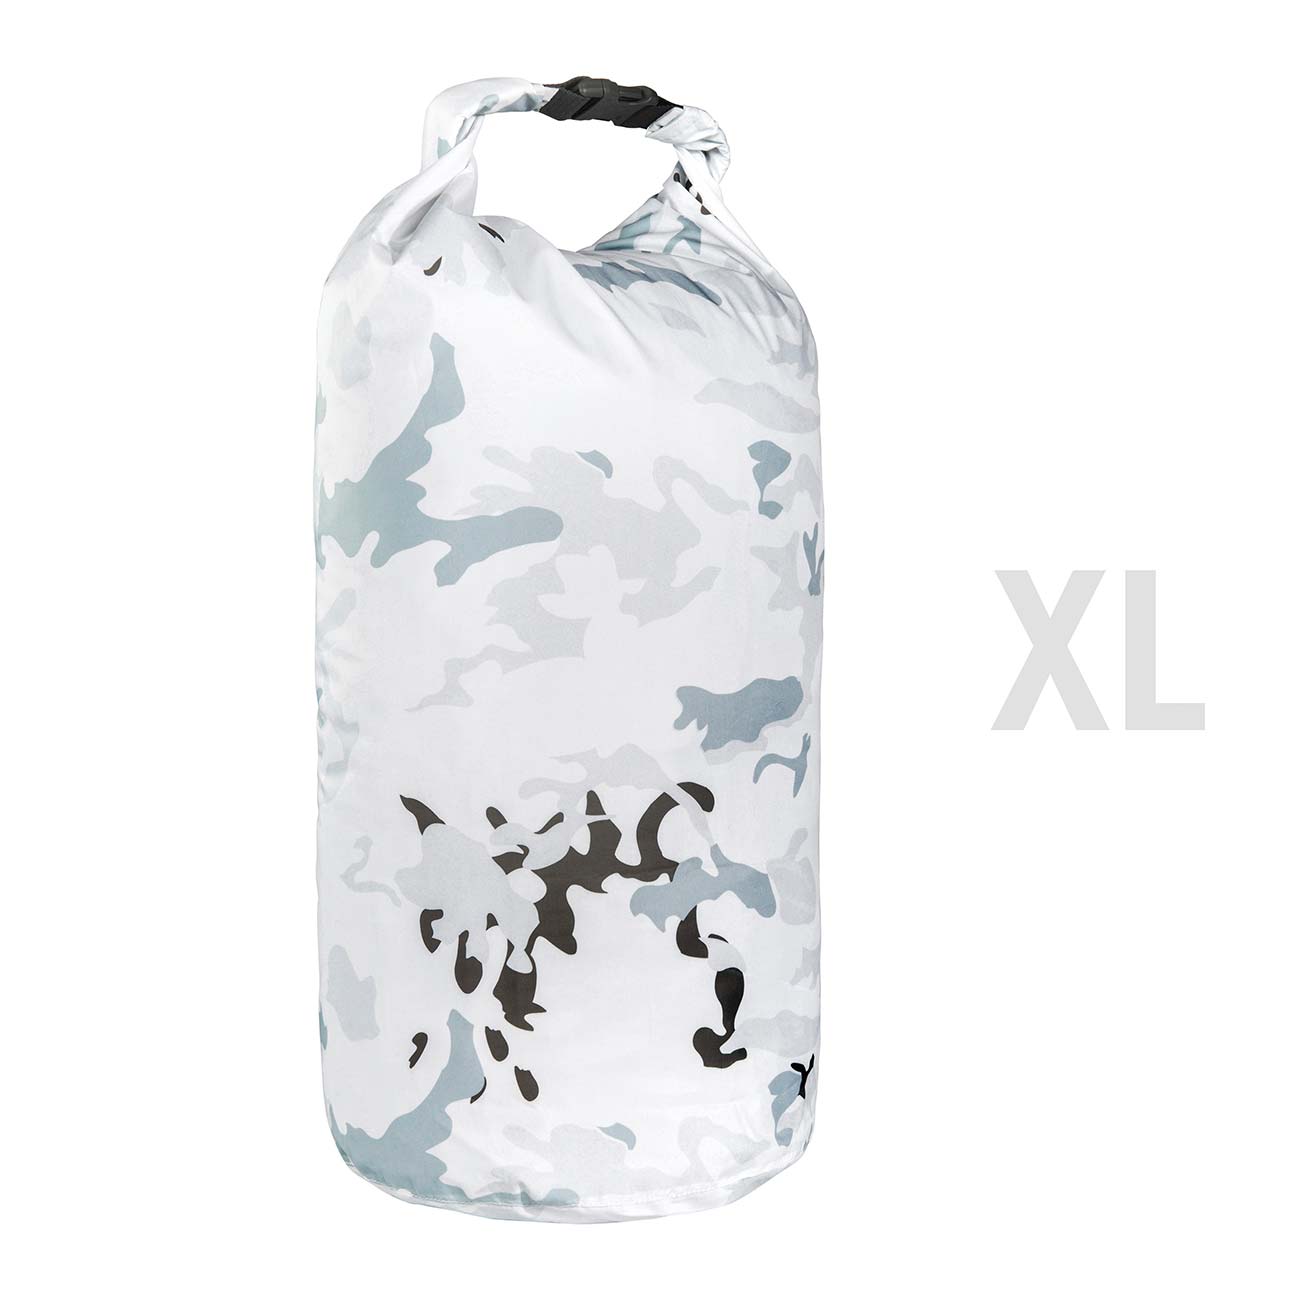 Tasmanian Tiger Packsack Waterproof Bag XL 80 Liter wasserdicht snow forest